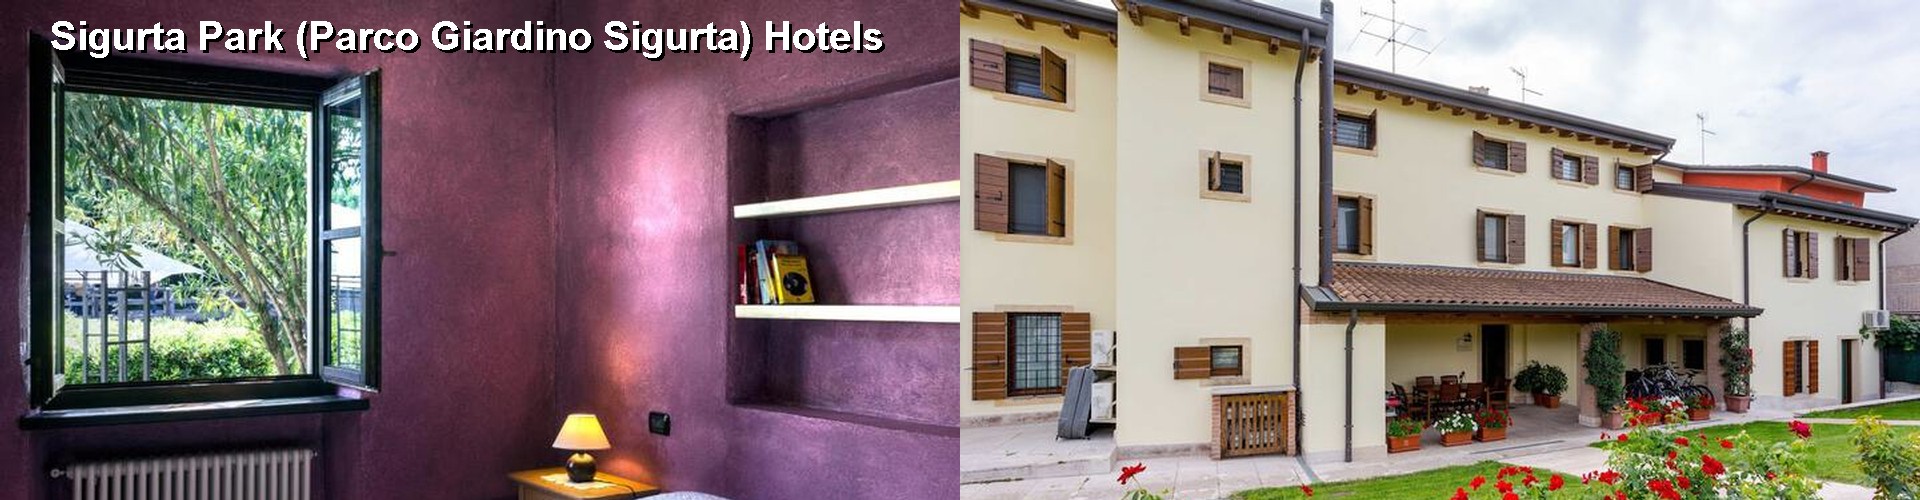 5 Best Hotels near Sigurta Park (Parco Giardino Sigurta)